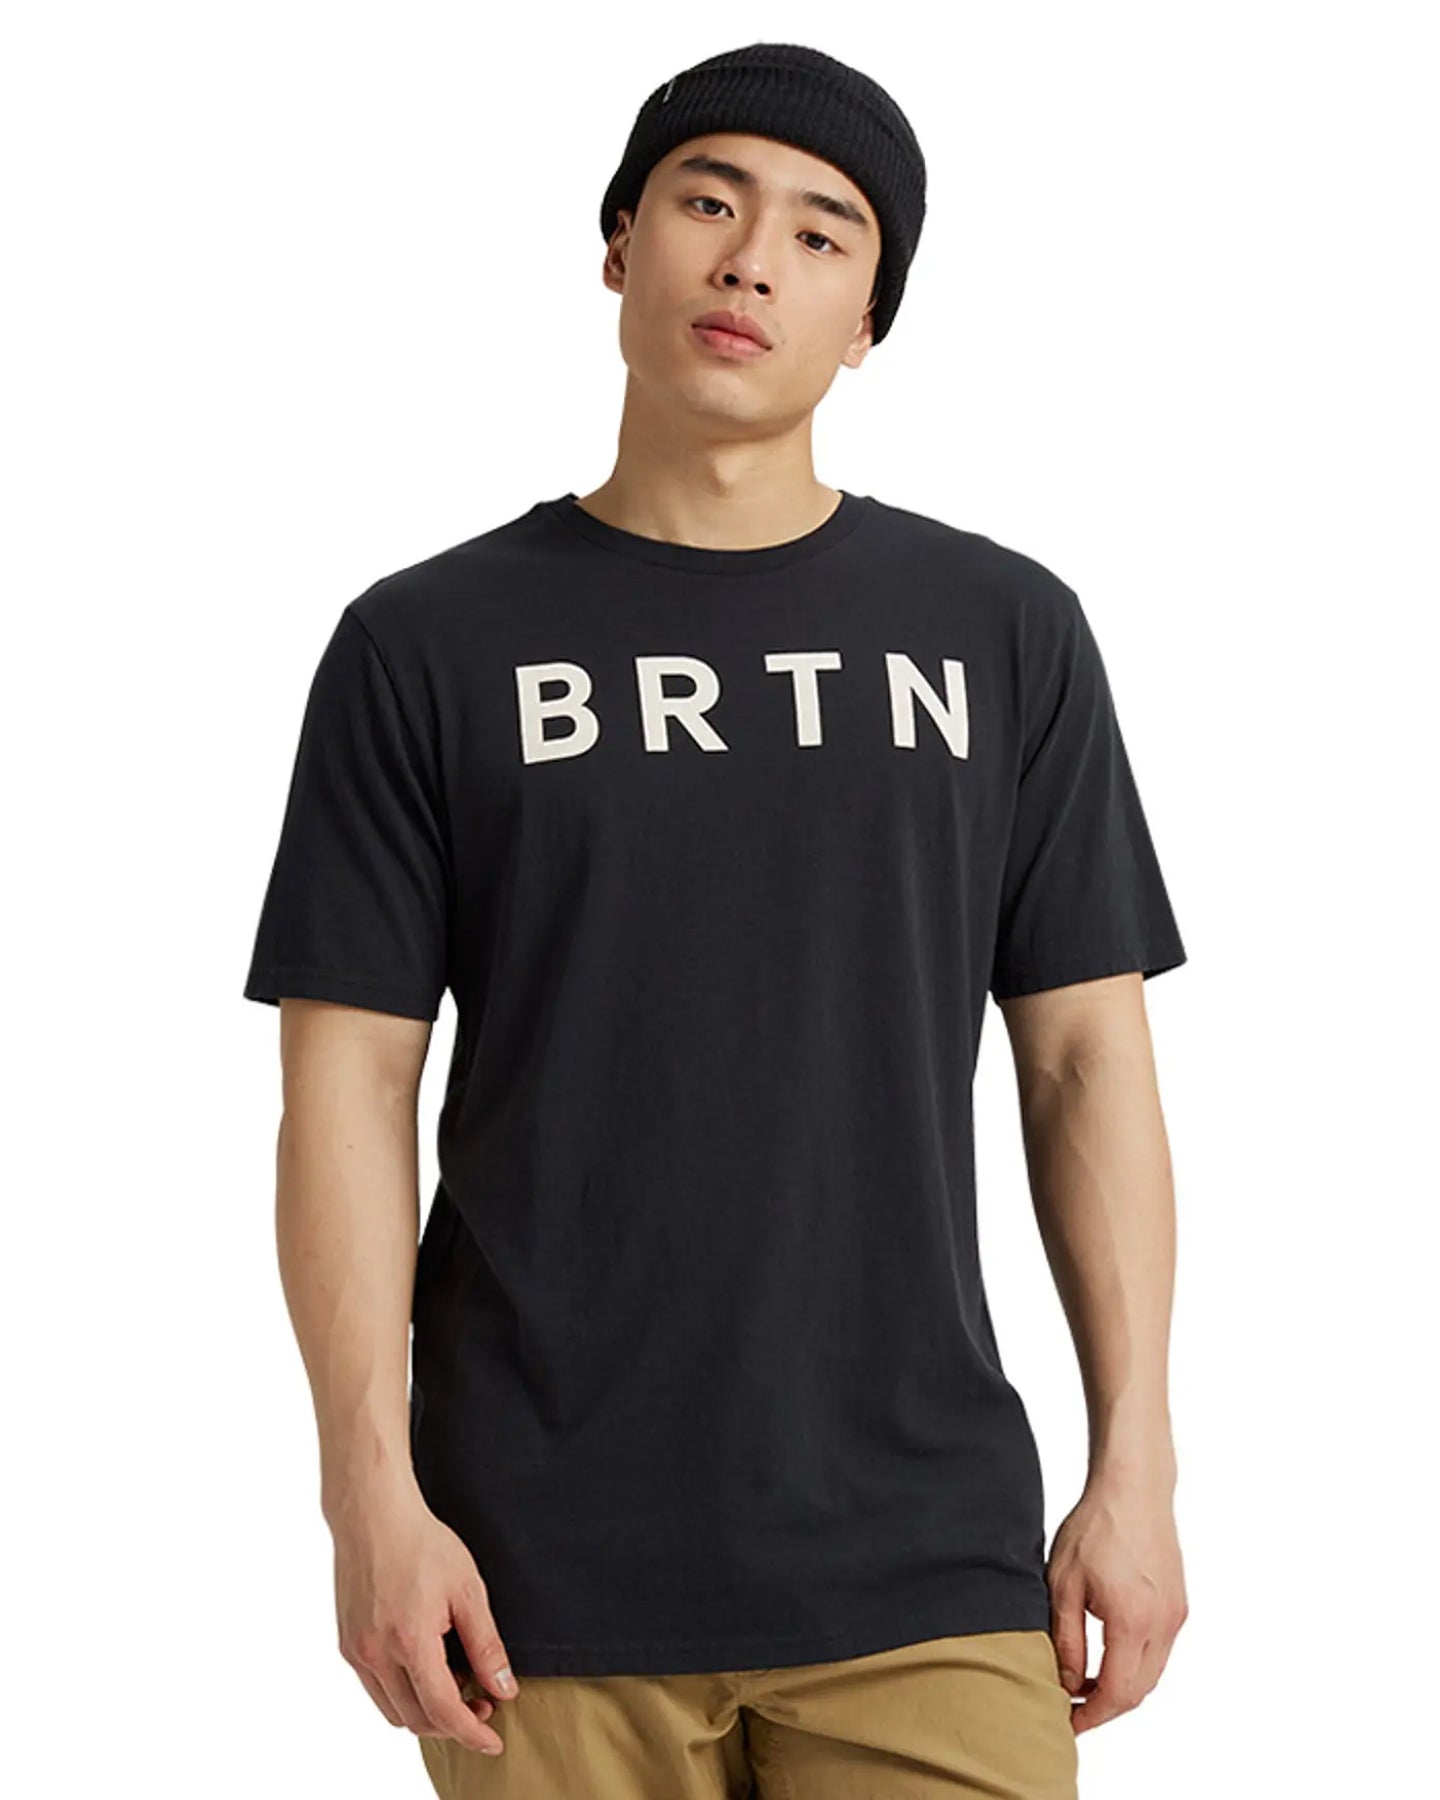 Burton BRTN Short Sleeve Tee - True Black - 2022 Shirts & Tops - SnowSkiersWarehouse